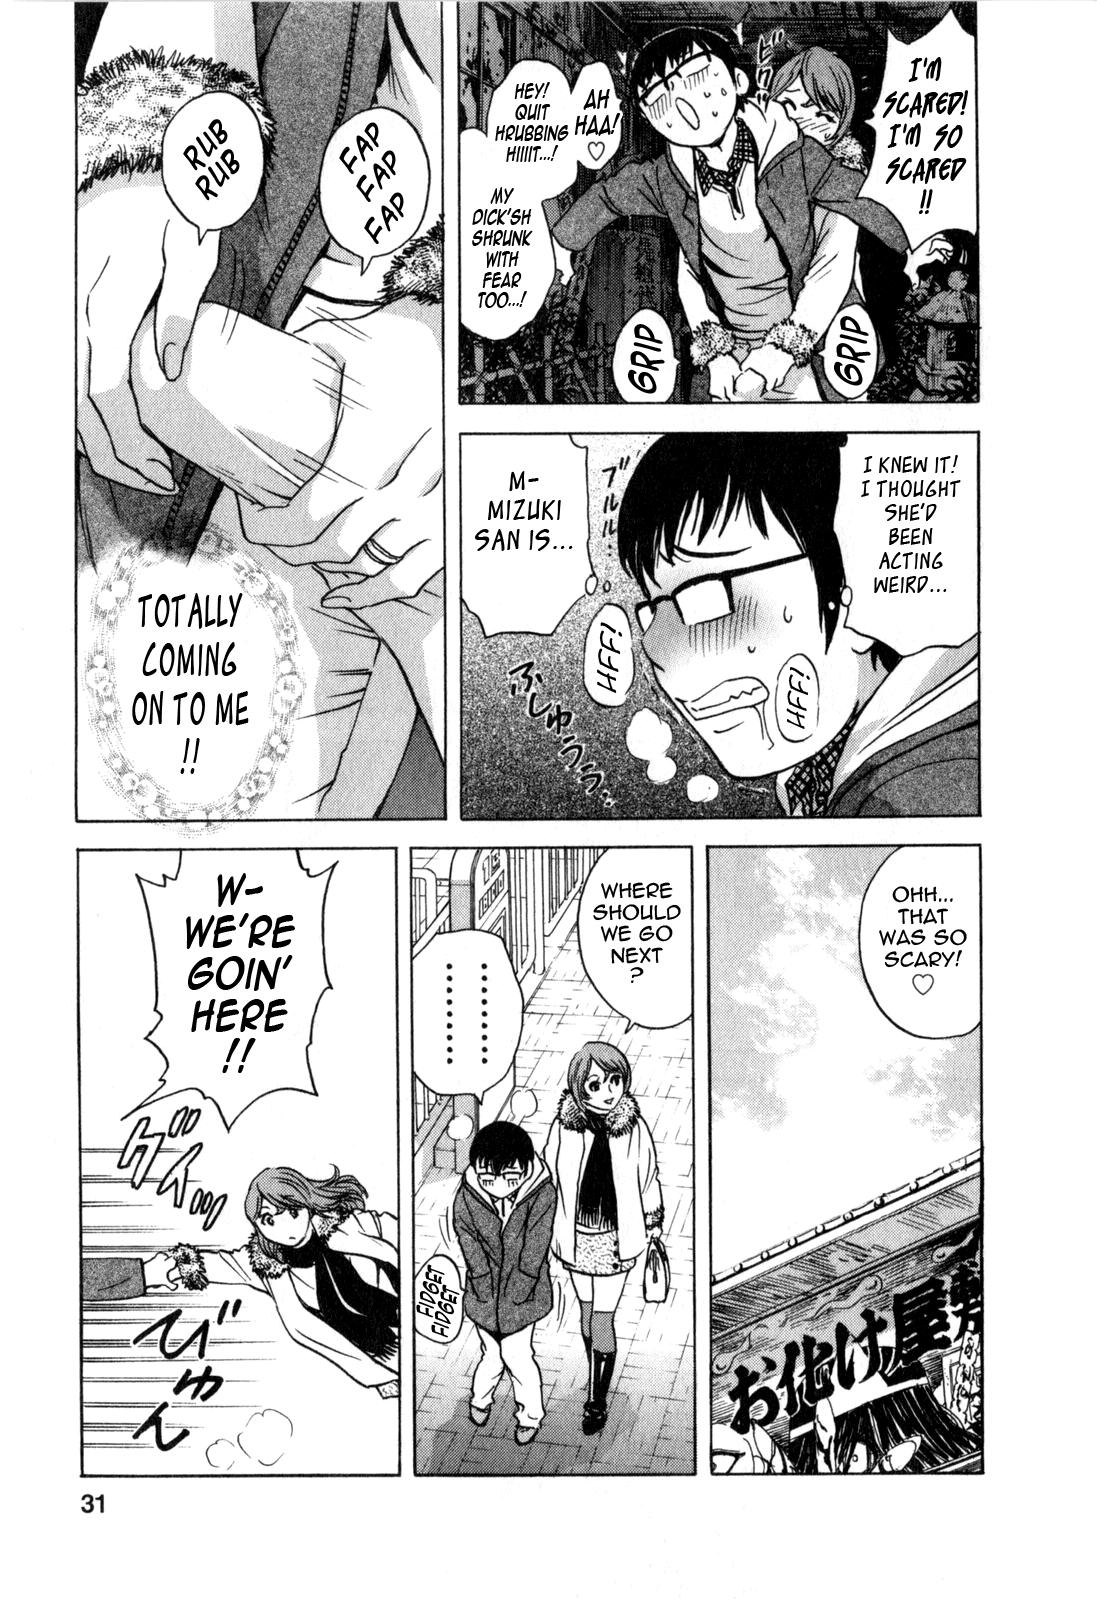 [Hidemaru] Life with Married Women Just Like a Manga 3 - Ch. 1-7 [English] {Tadanohito} 33